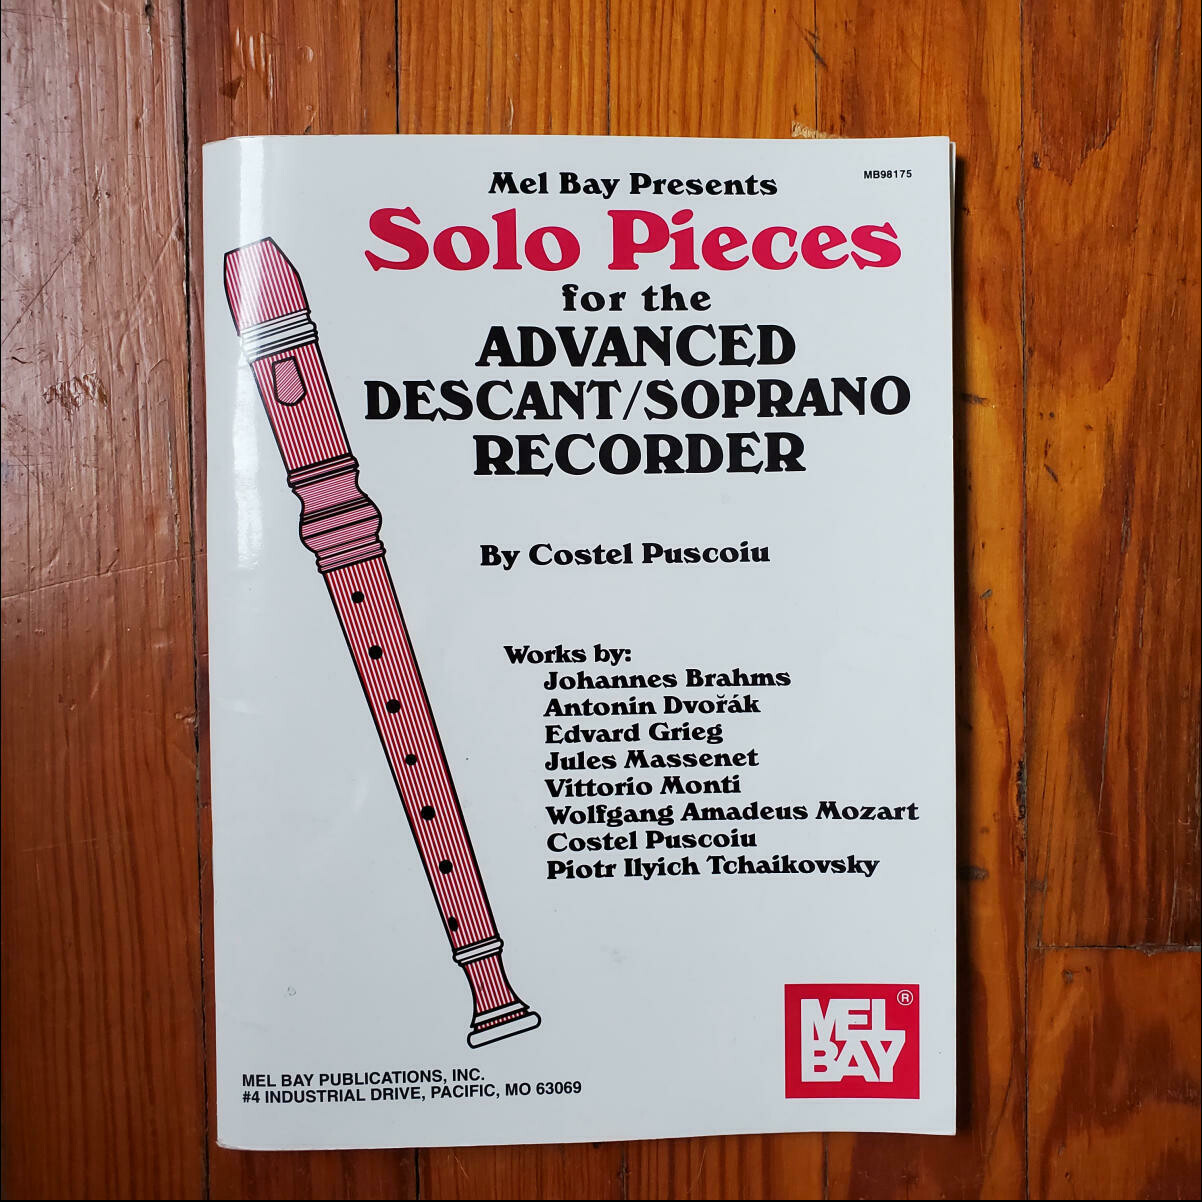 Solo Pieces for the Advanced Descant/Soprano Recorder by: Costel Puscoiu